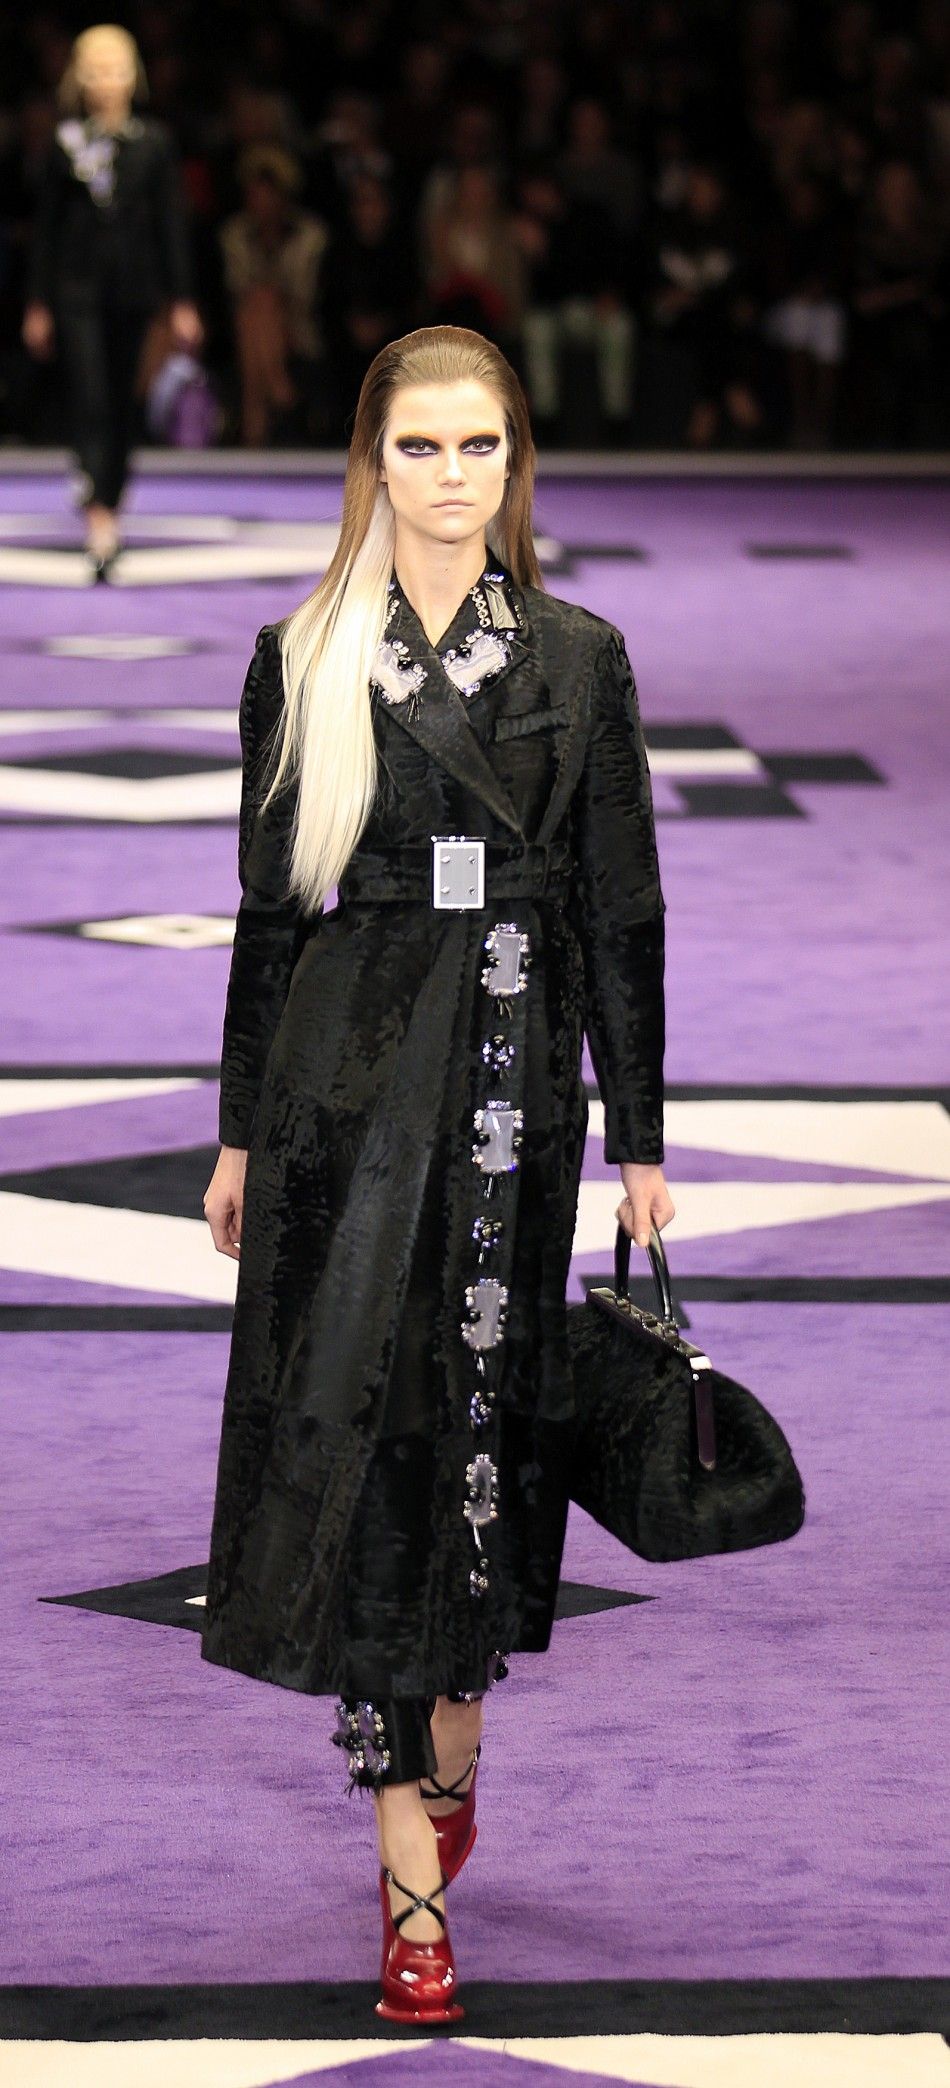 Complete Look of Pradas AutumnWinter Collection at 2012 Milan Fashion Week 